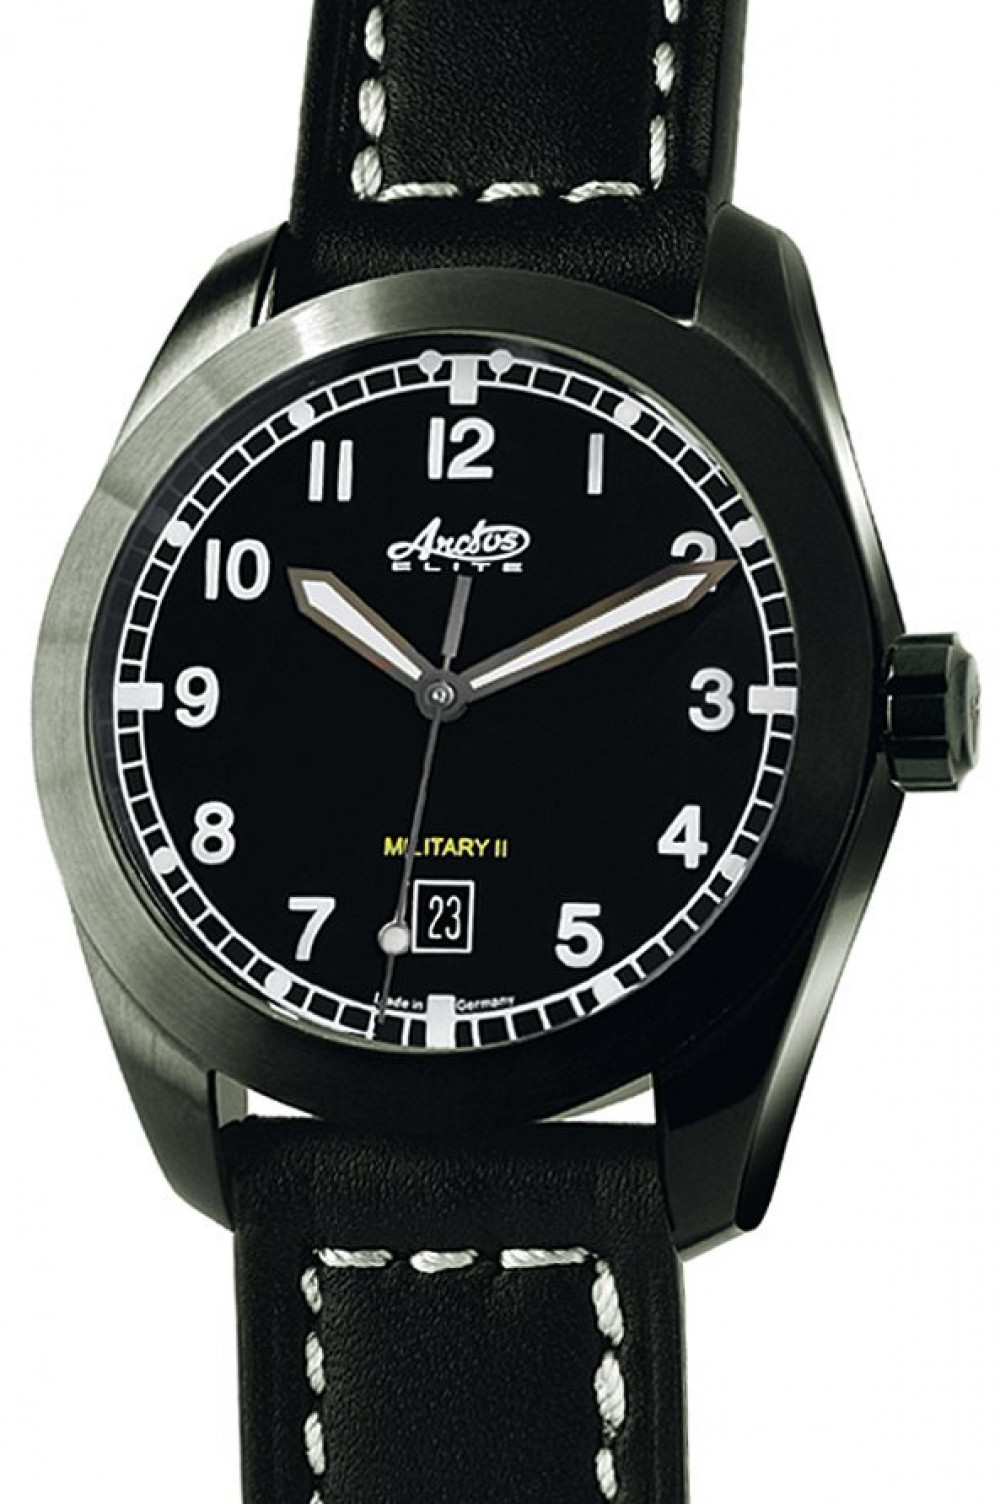 Zegarek firmy Arctos, model Military II